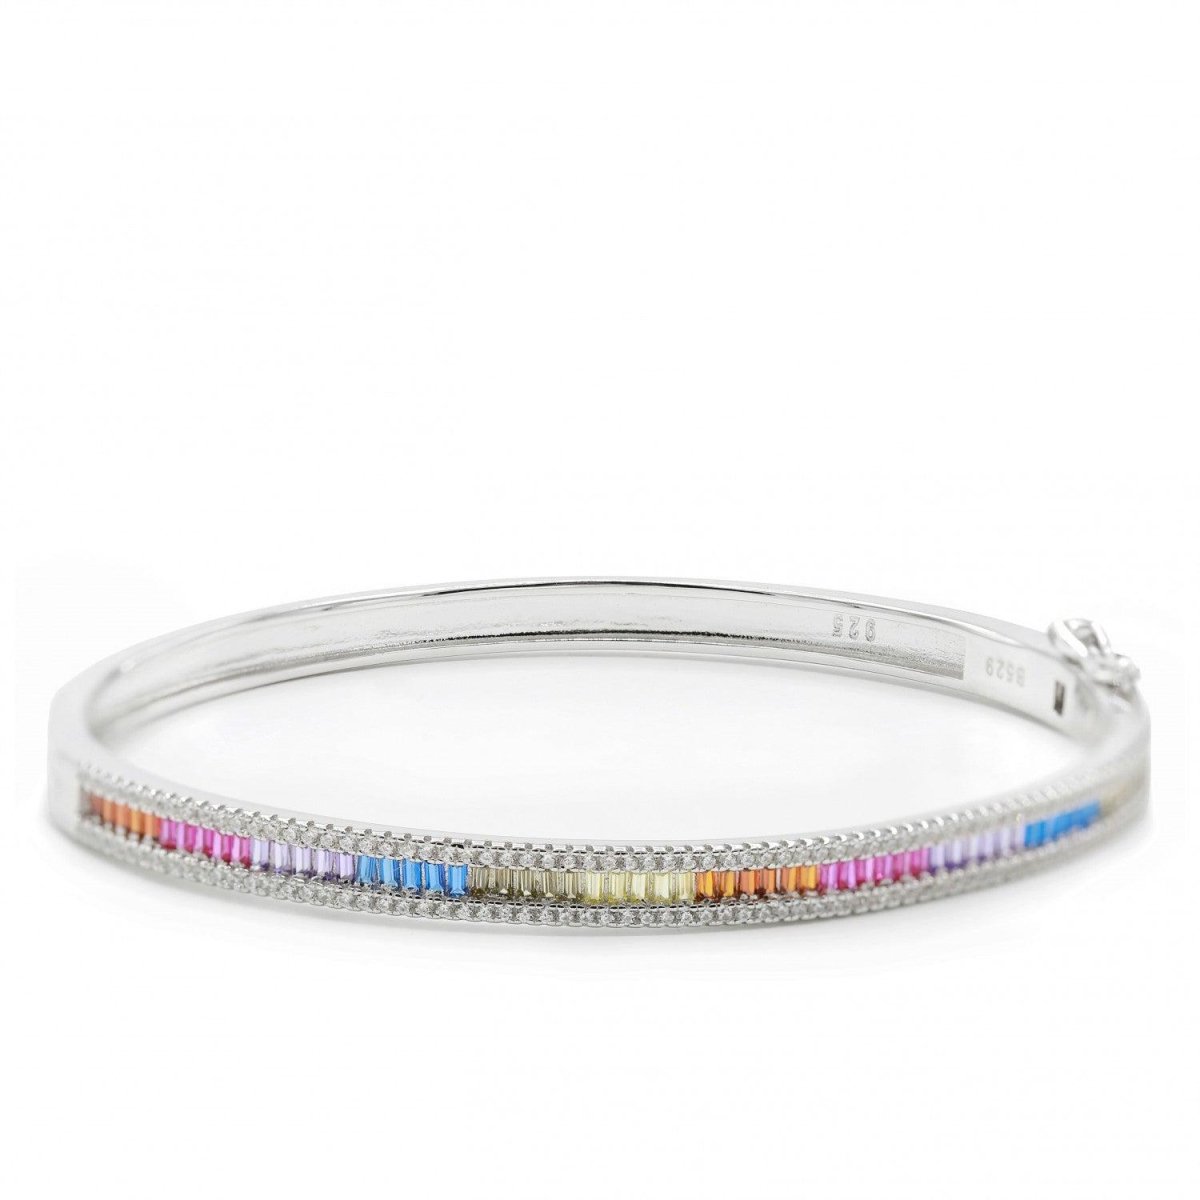 Bracelet - Silver bracelet bracelet multicolor design